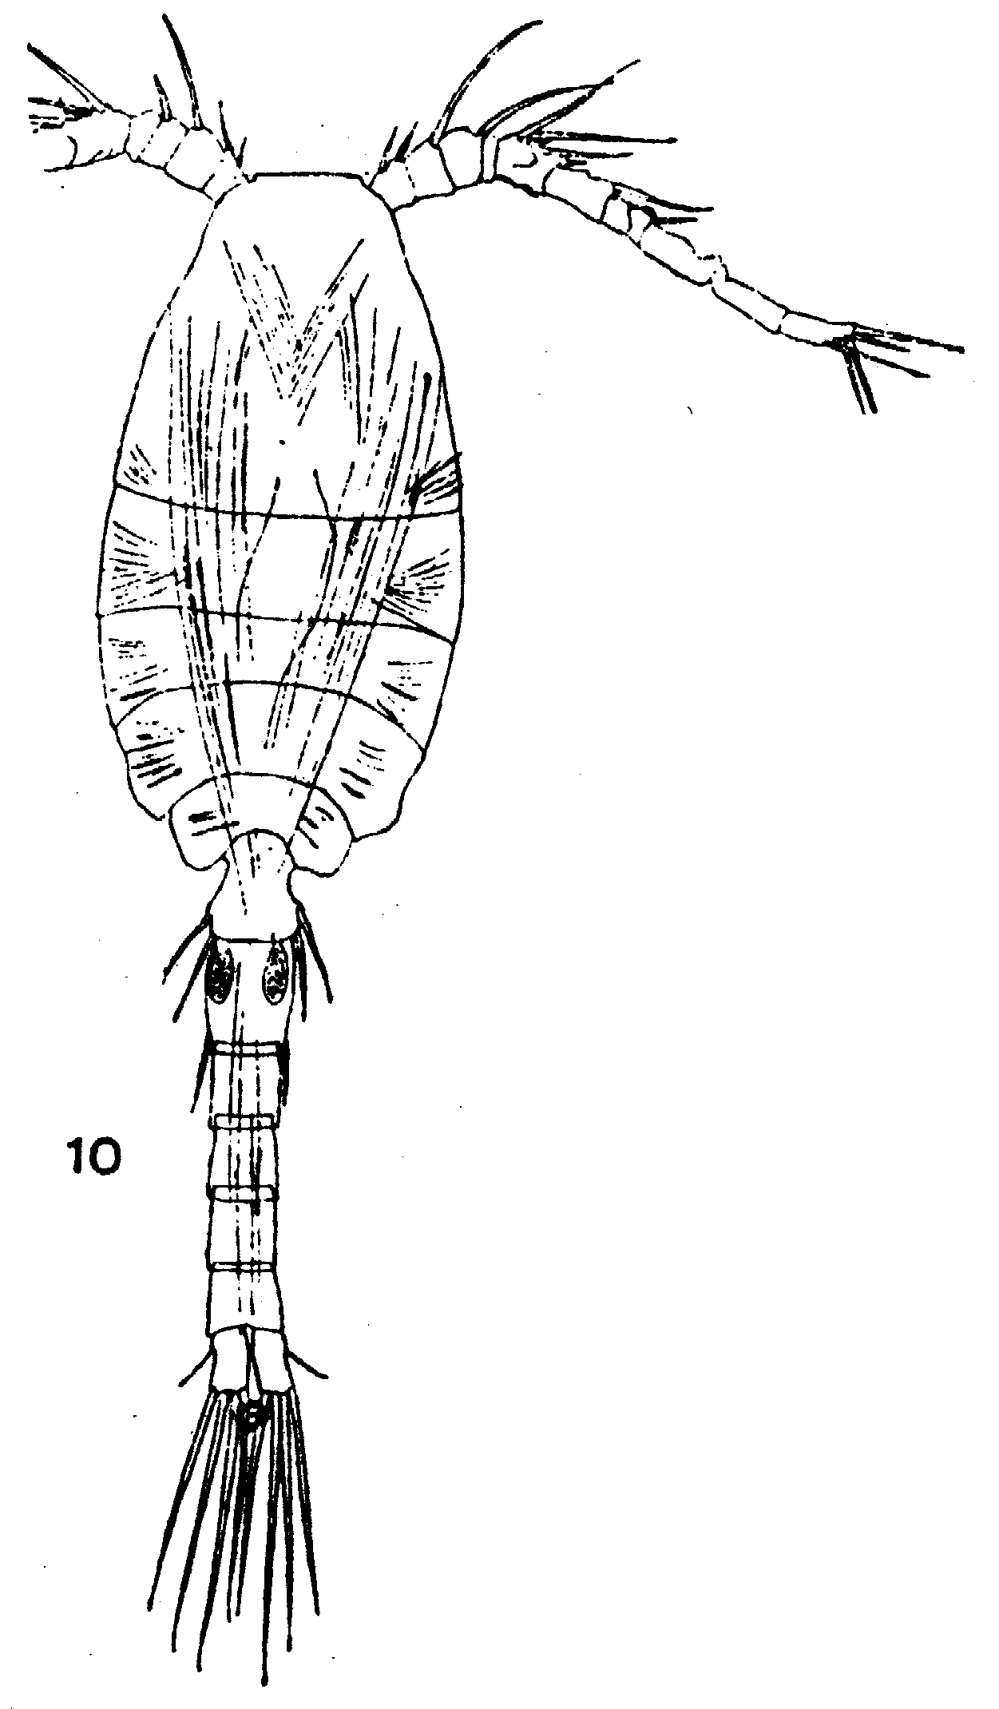 Species Dioithona rigida - Plate 5 of morphological figures